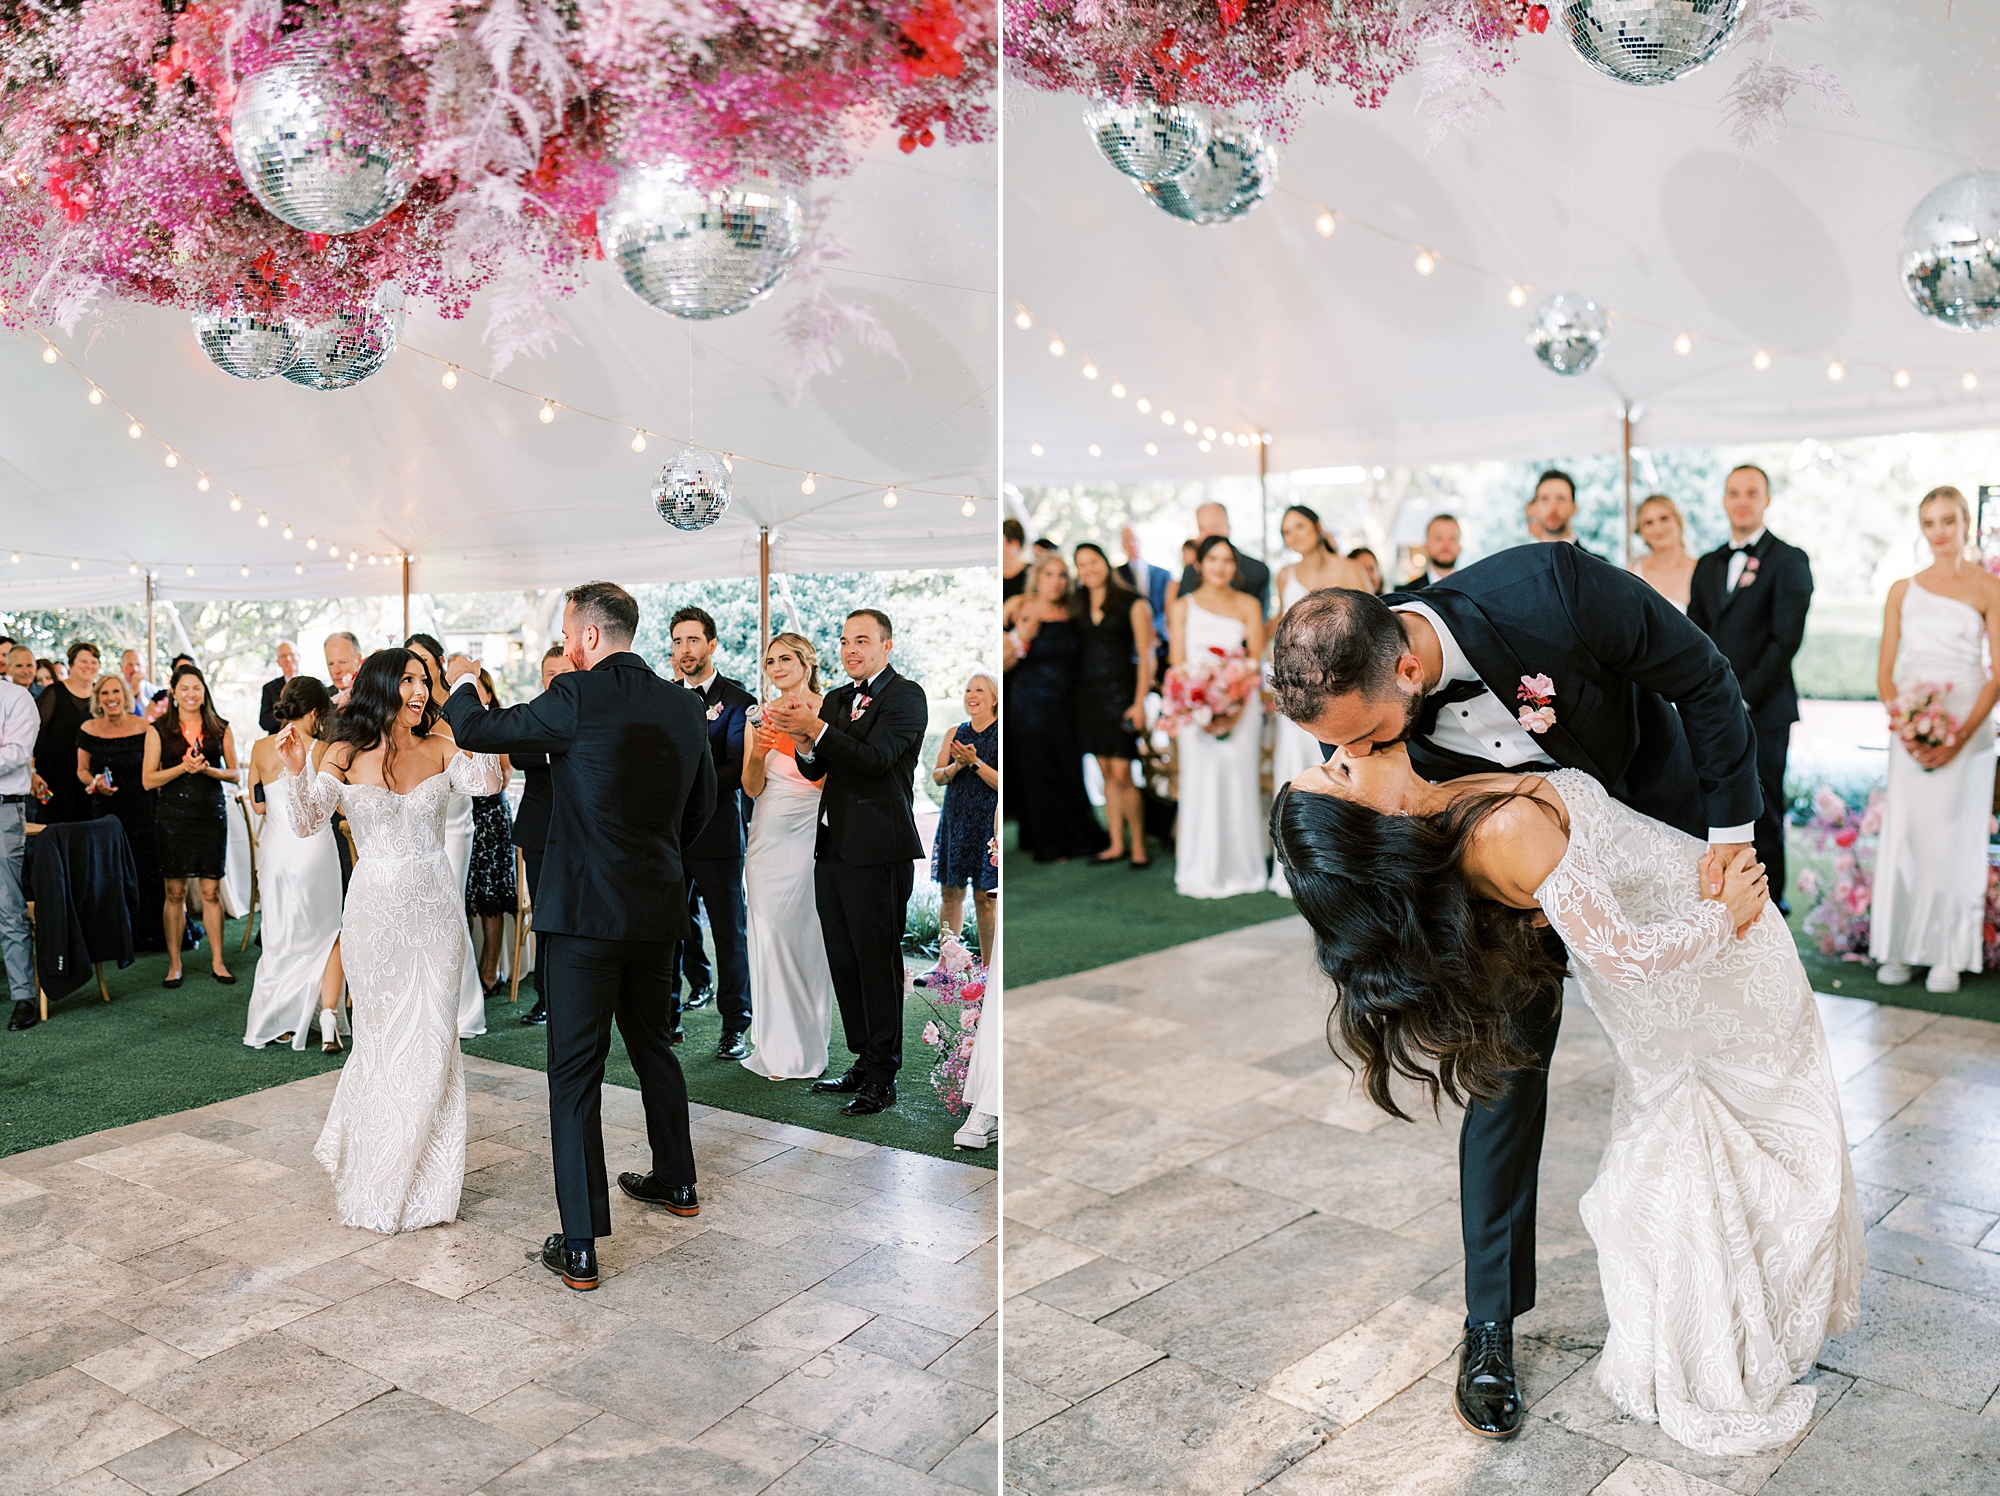 groom dips bride on dance floor under pink floral display and disco balls